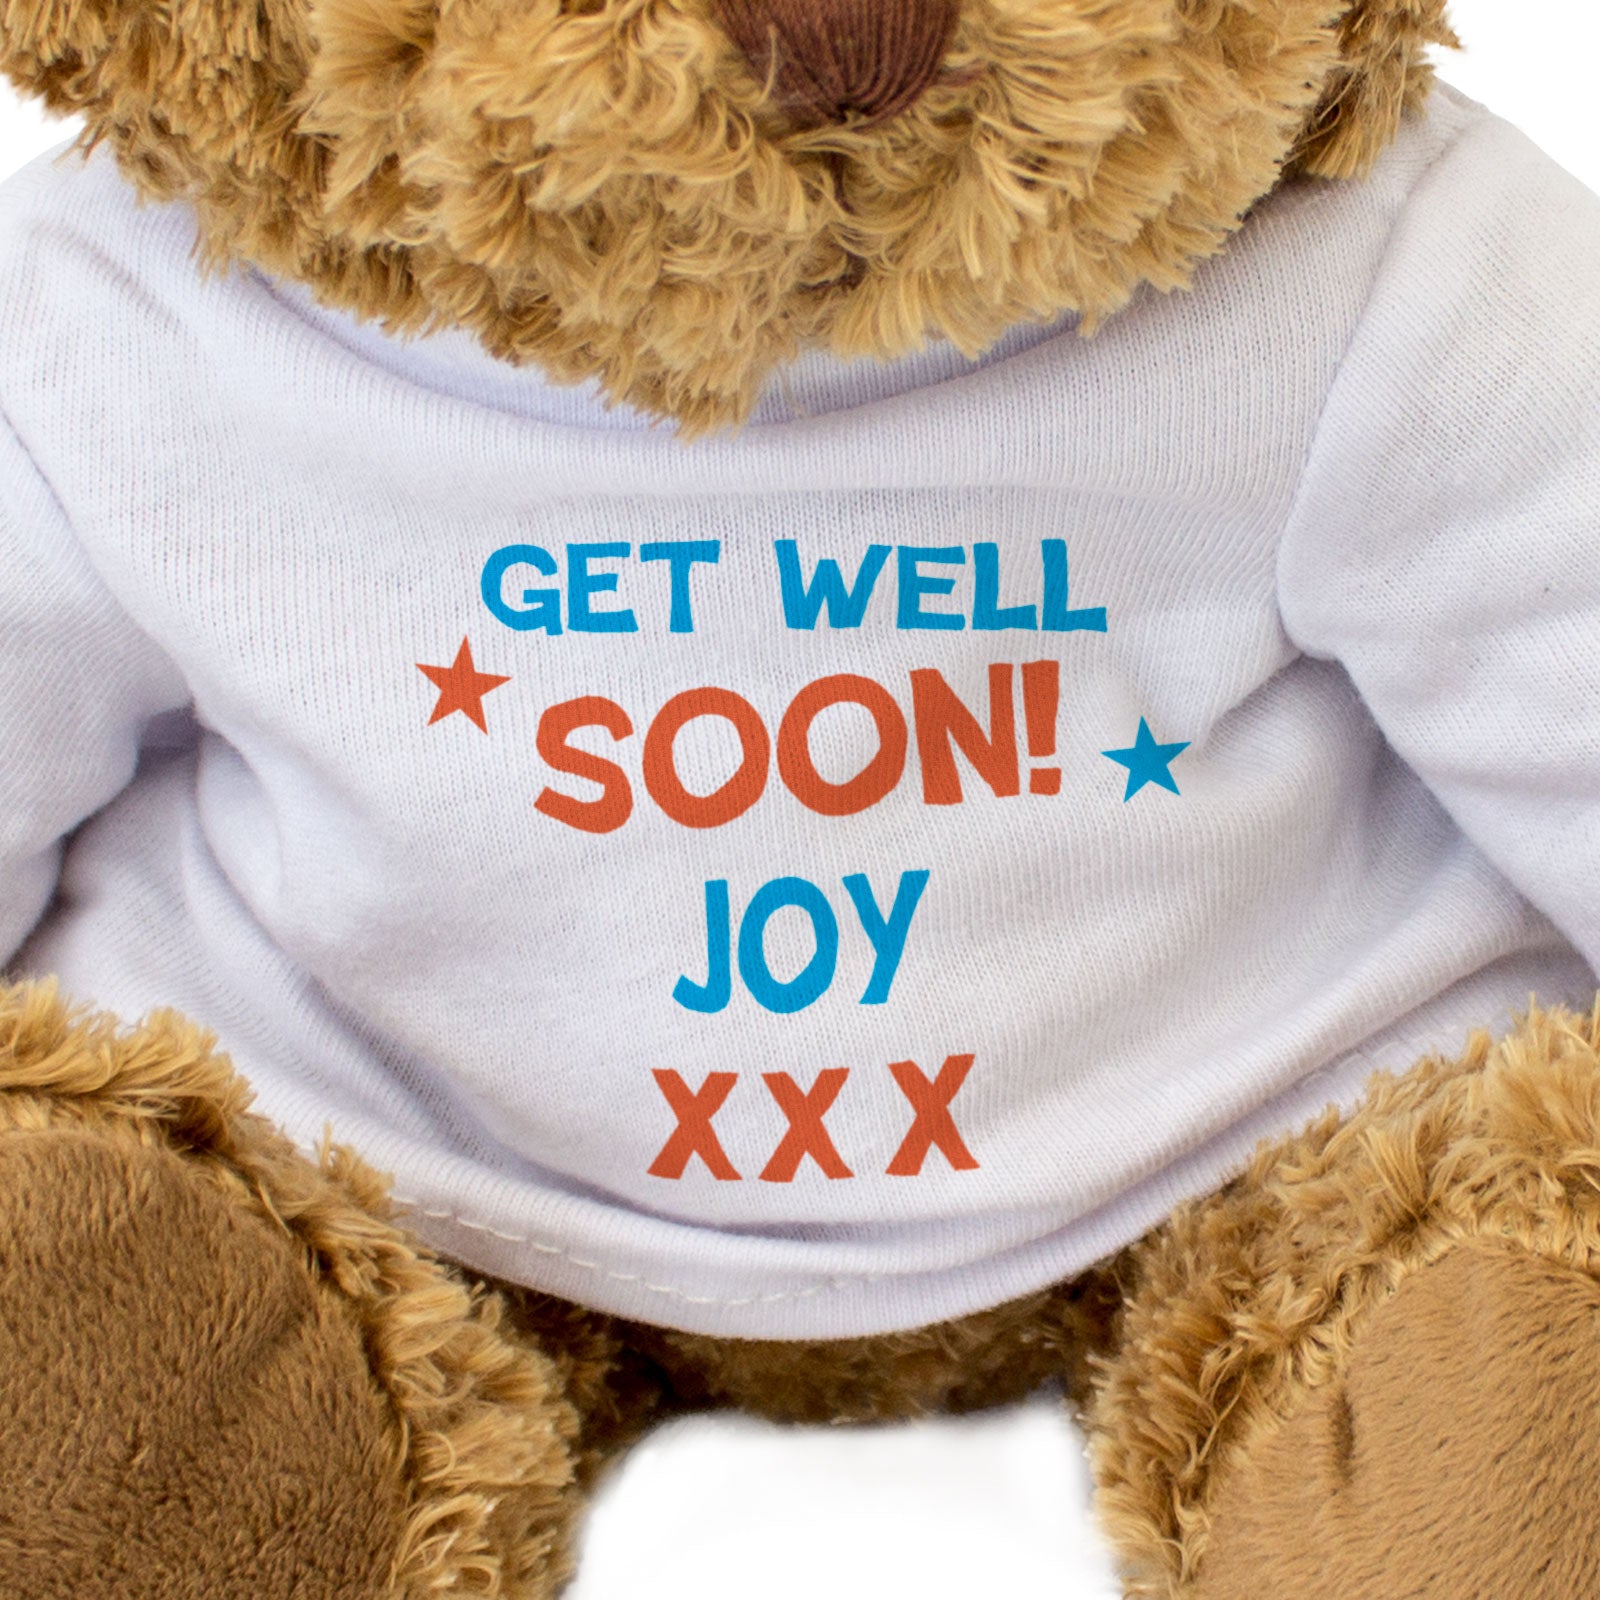 Get Well Soon Joy - Teddy Bear